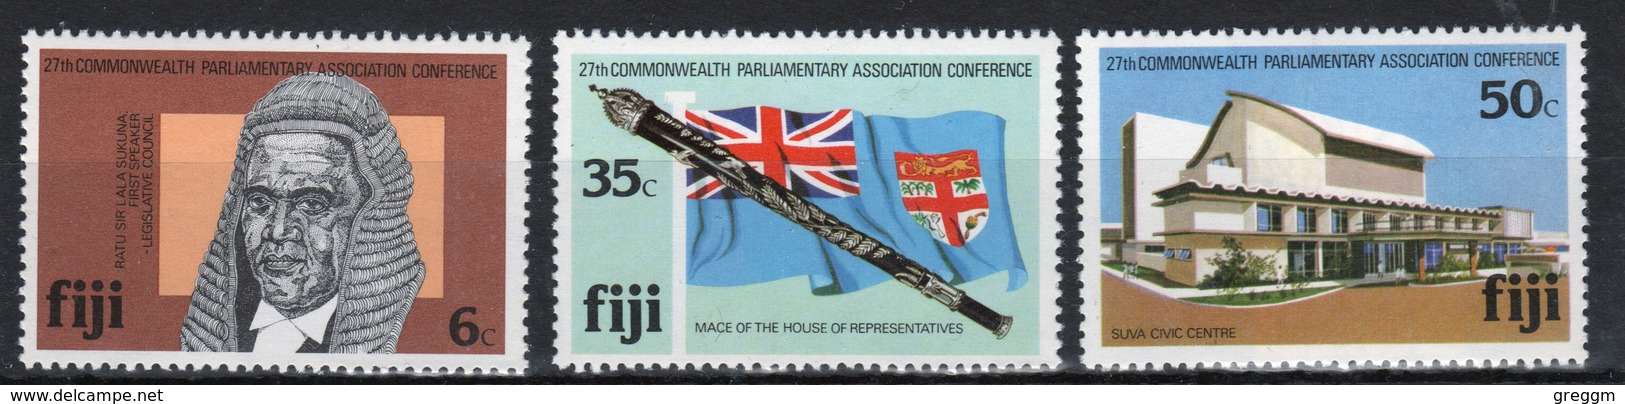 Fiji 1981 Set Of Stamps To Celebrate The Parliamentary Association Conference. - Fiji (1970-...)